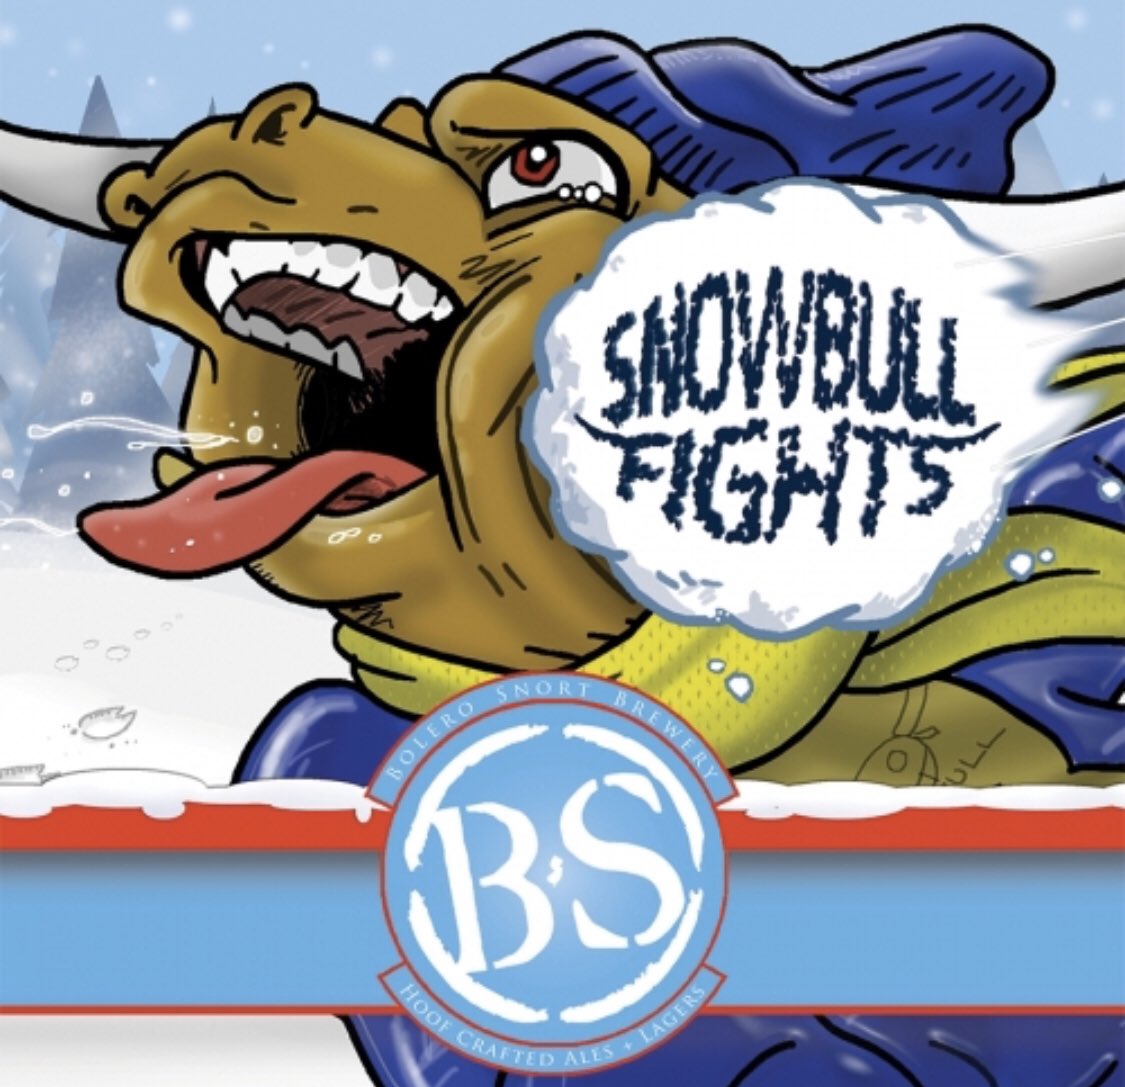 Just tapped BOLERO Snowbull Fights @BoleroSnort @swellsnj @NJCraftBeer @NJDiningOut @drinknewjersey @njisntboring